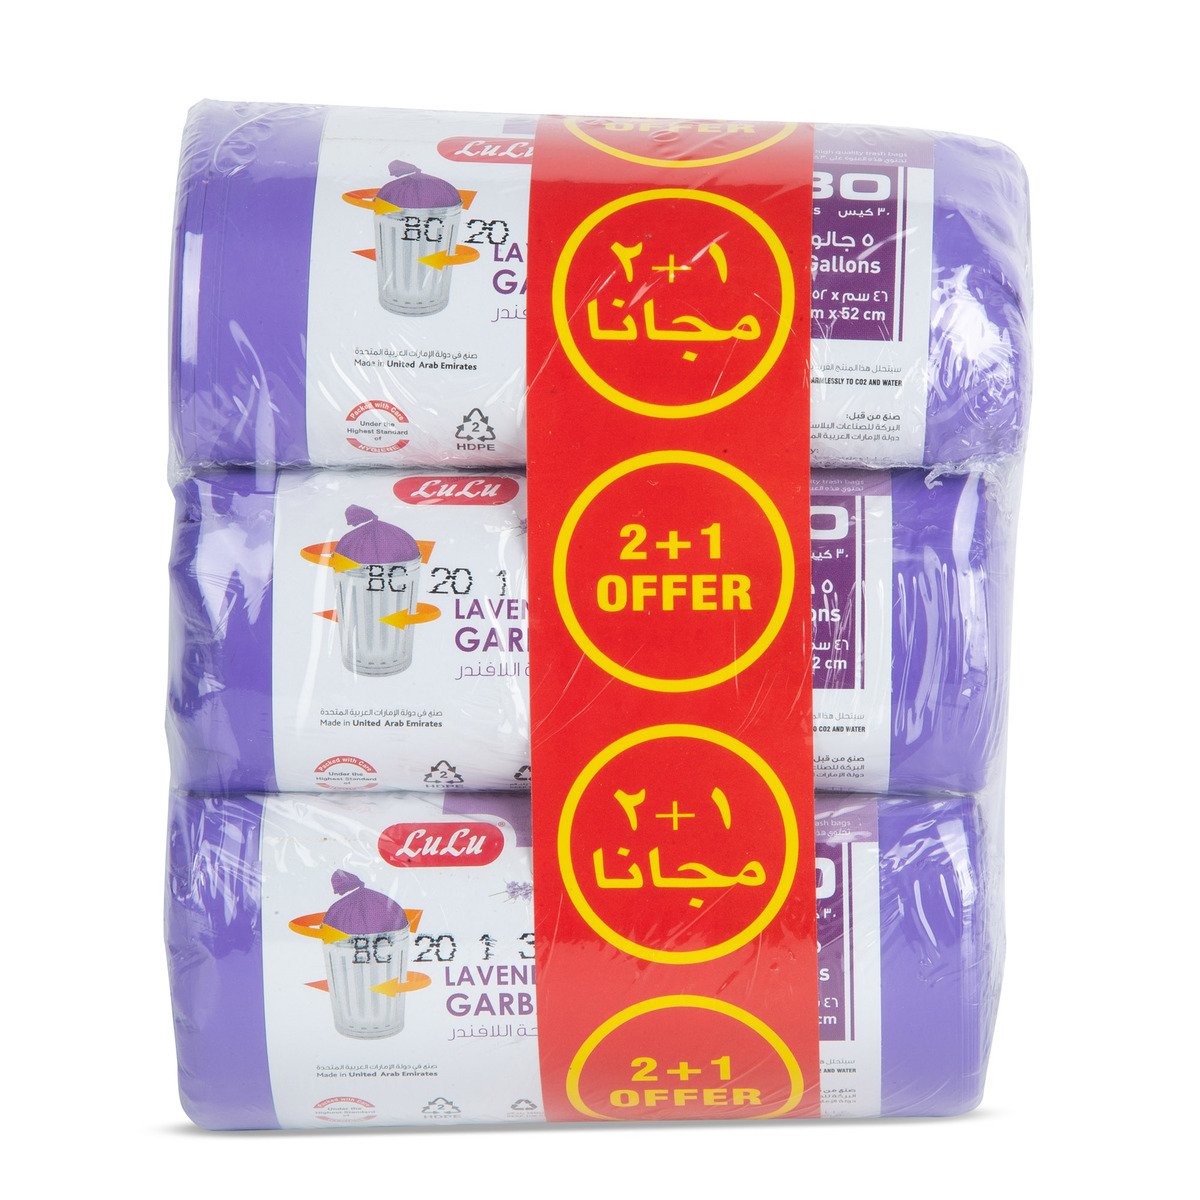 LuLu Garbage Bags Lavender 5 Gallons Size 46cm x 52cm 3pcs